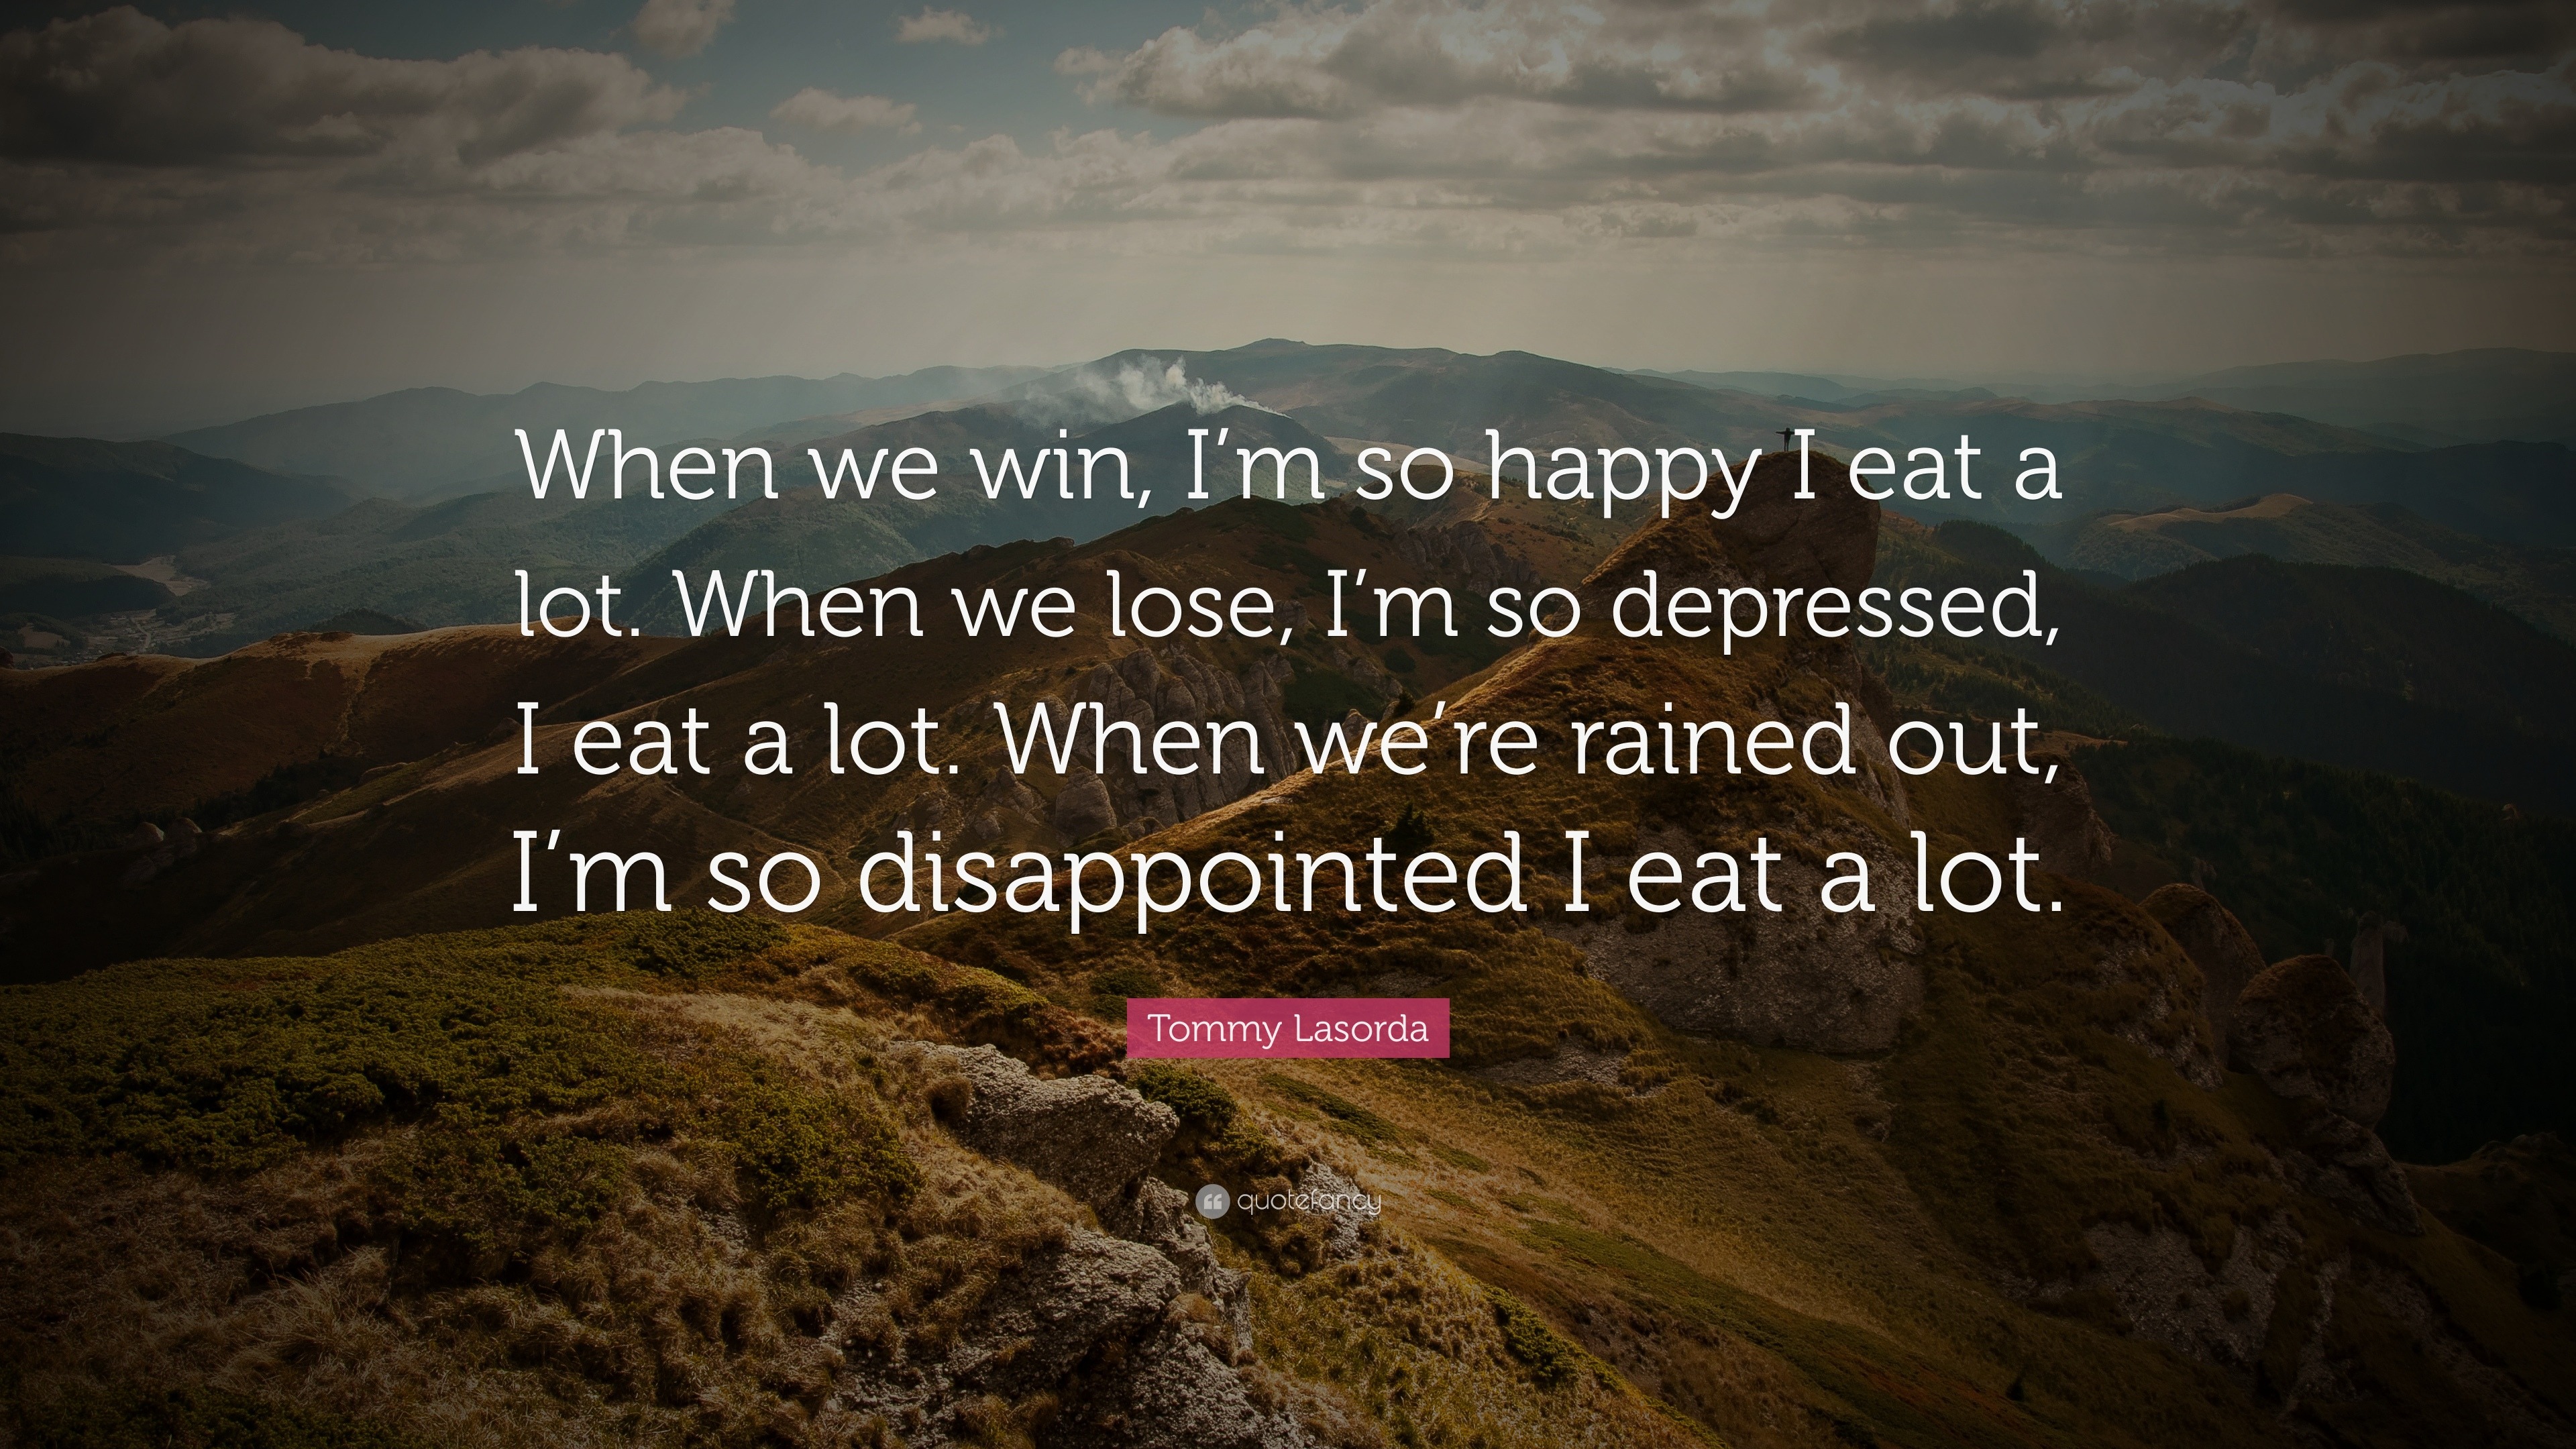 Tommy Lasorda - When we win, I'm so happy I eat a lot.